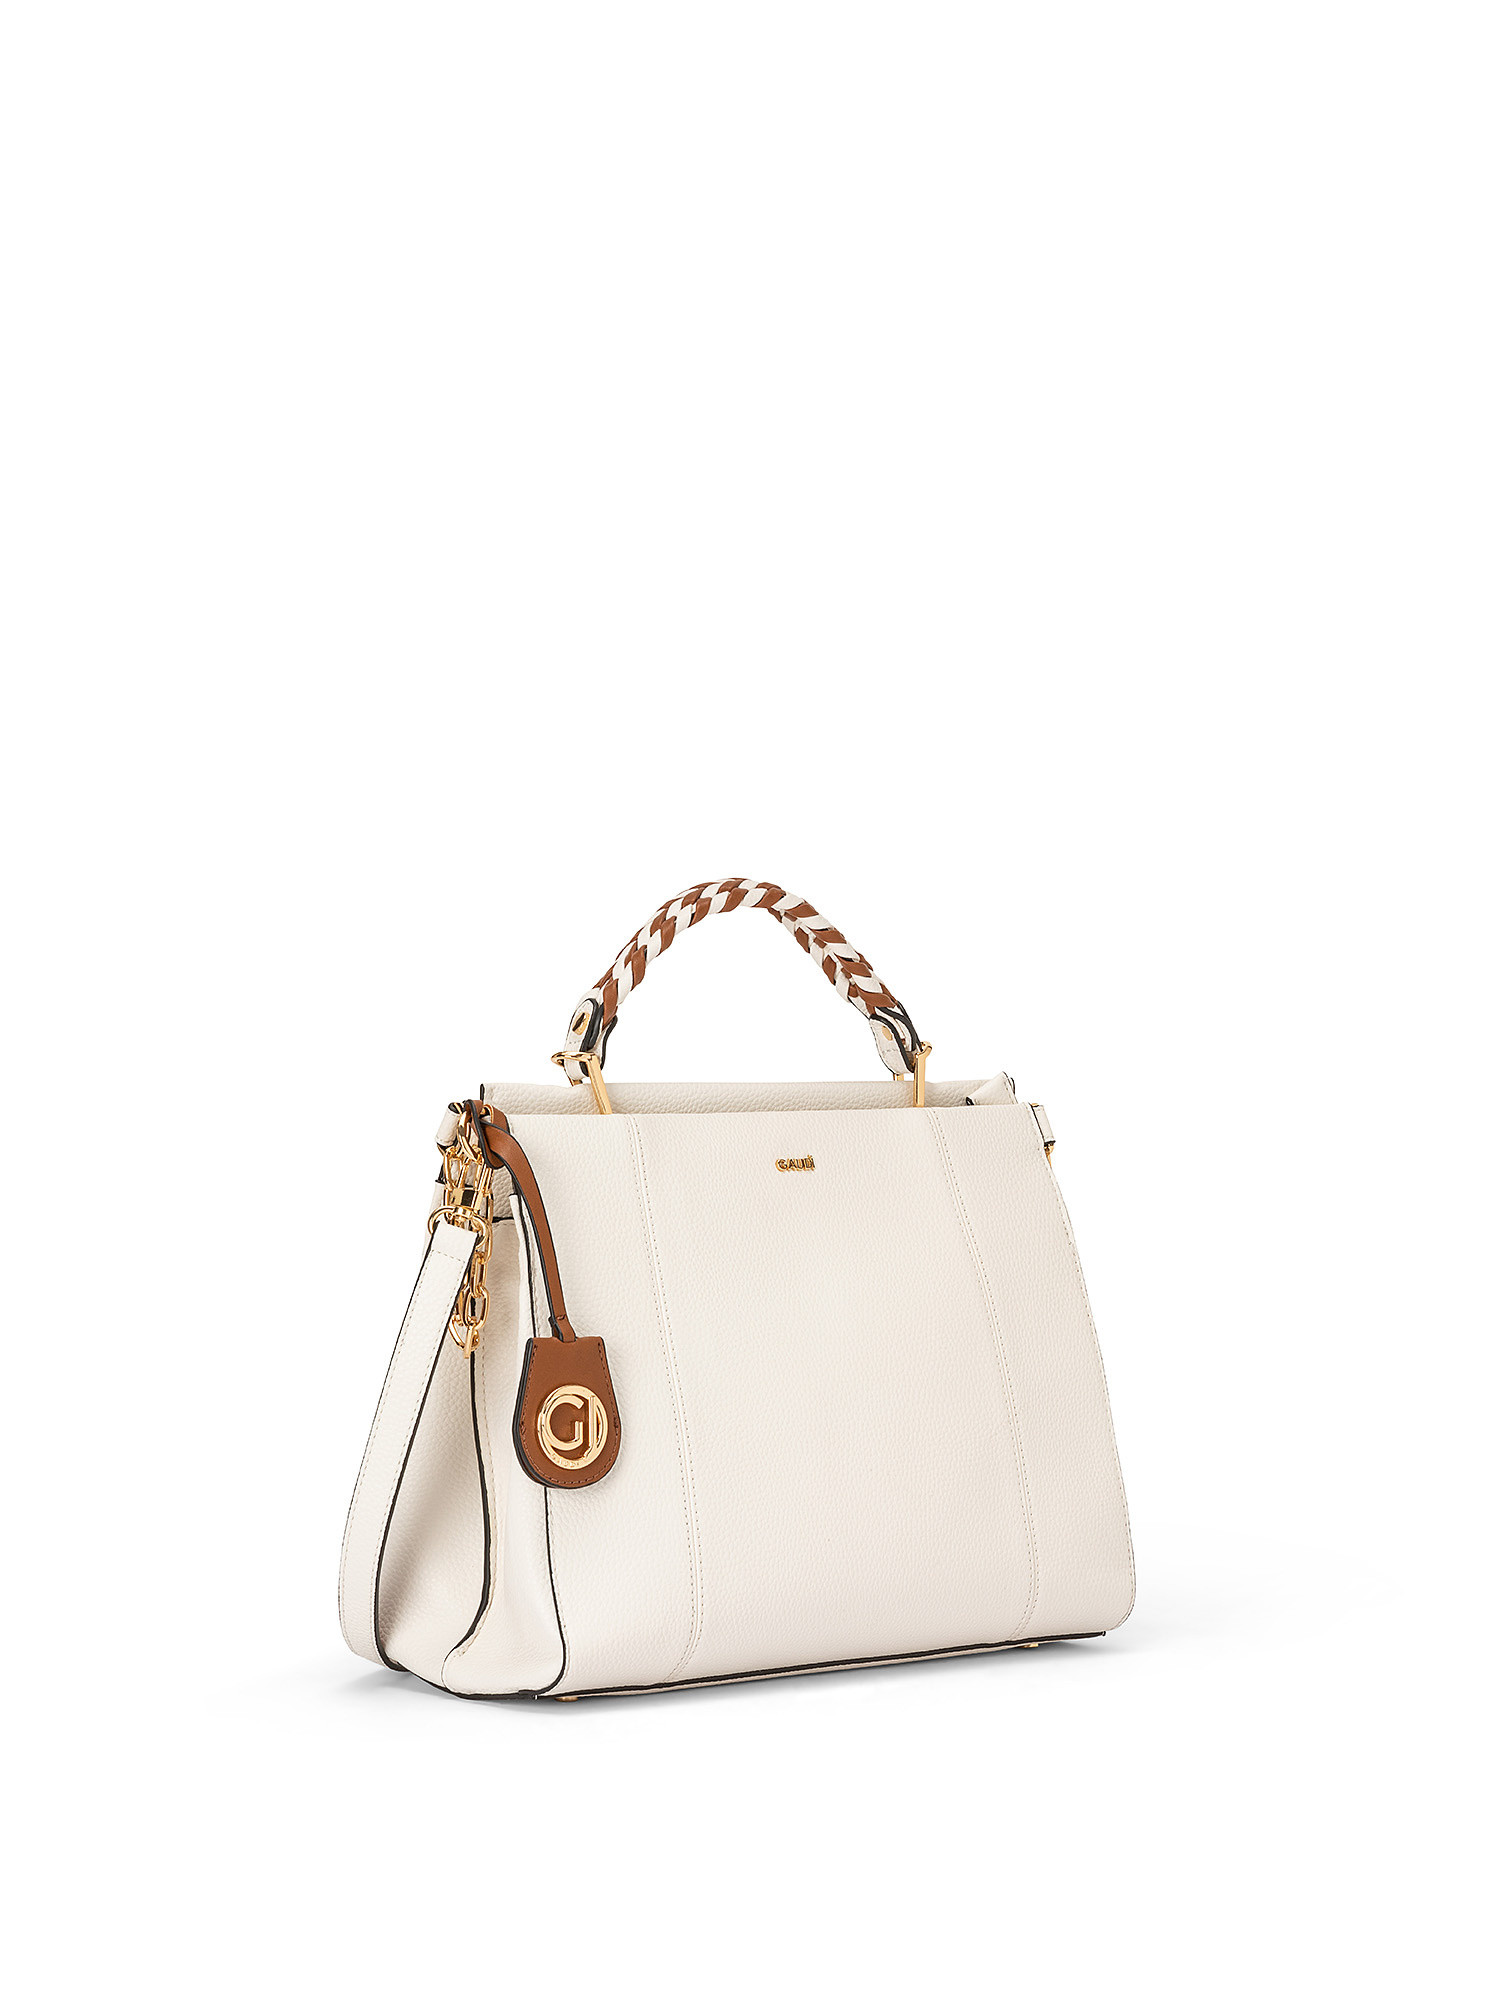 Zea handbag, White, large image number 1